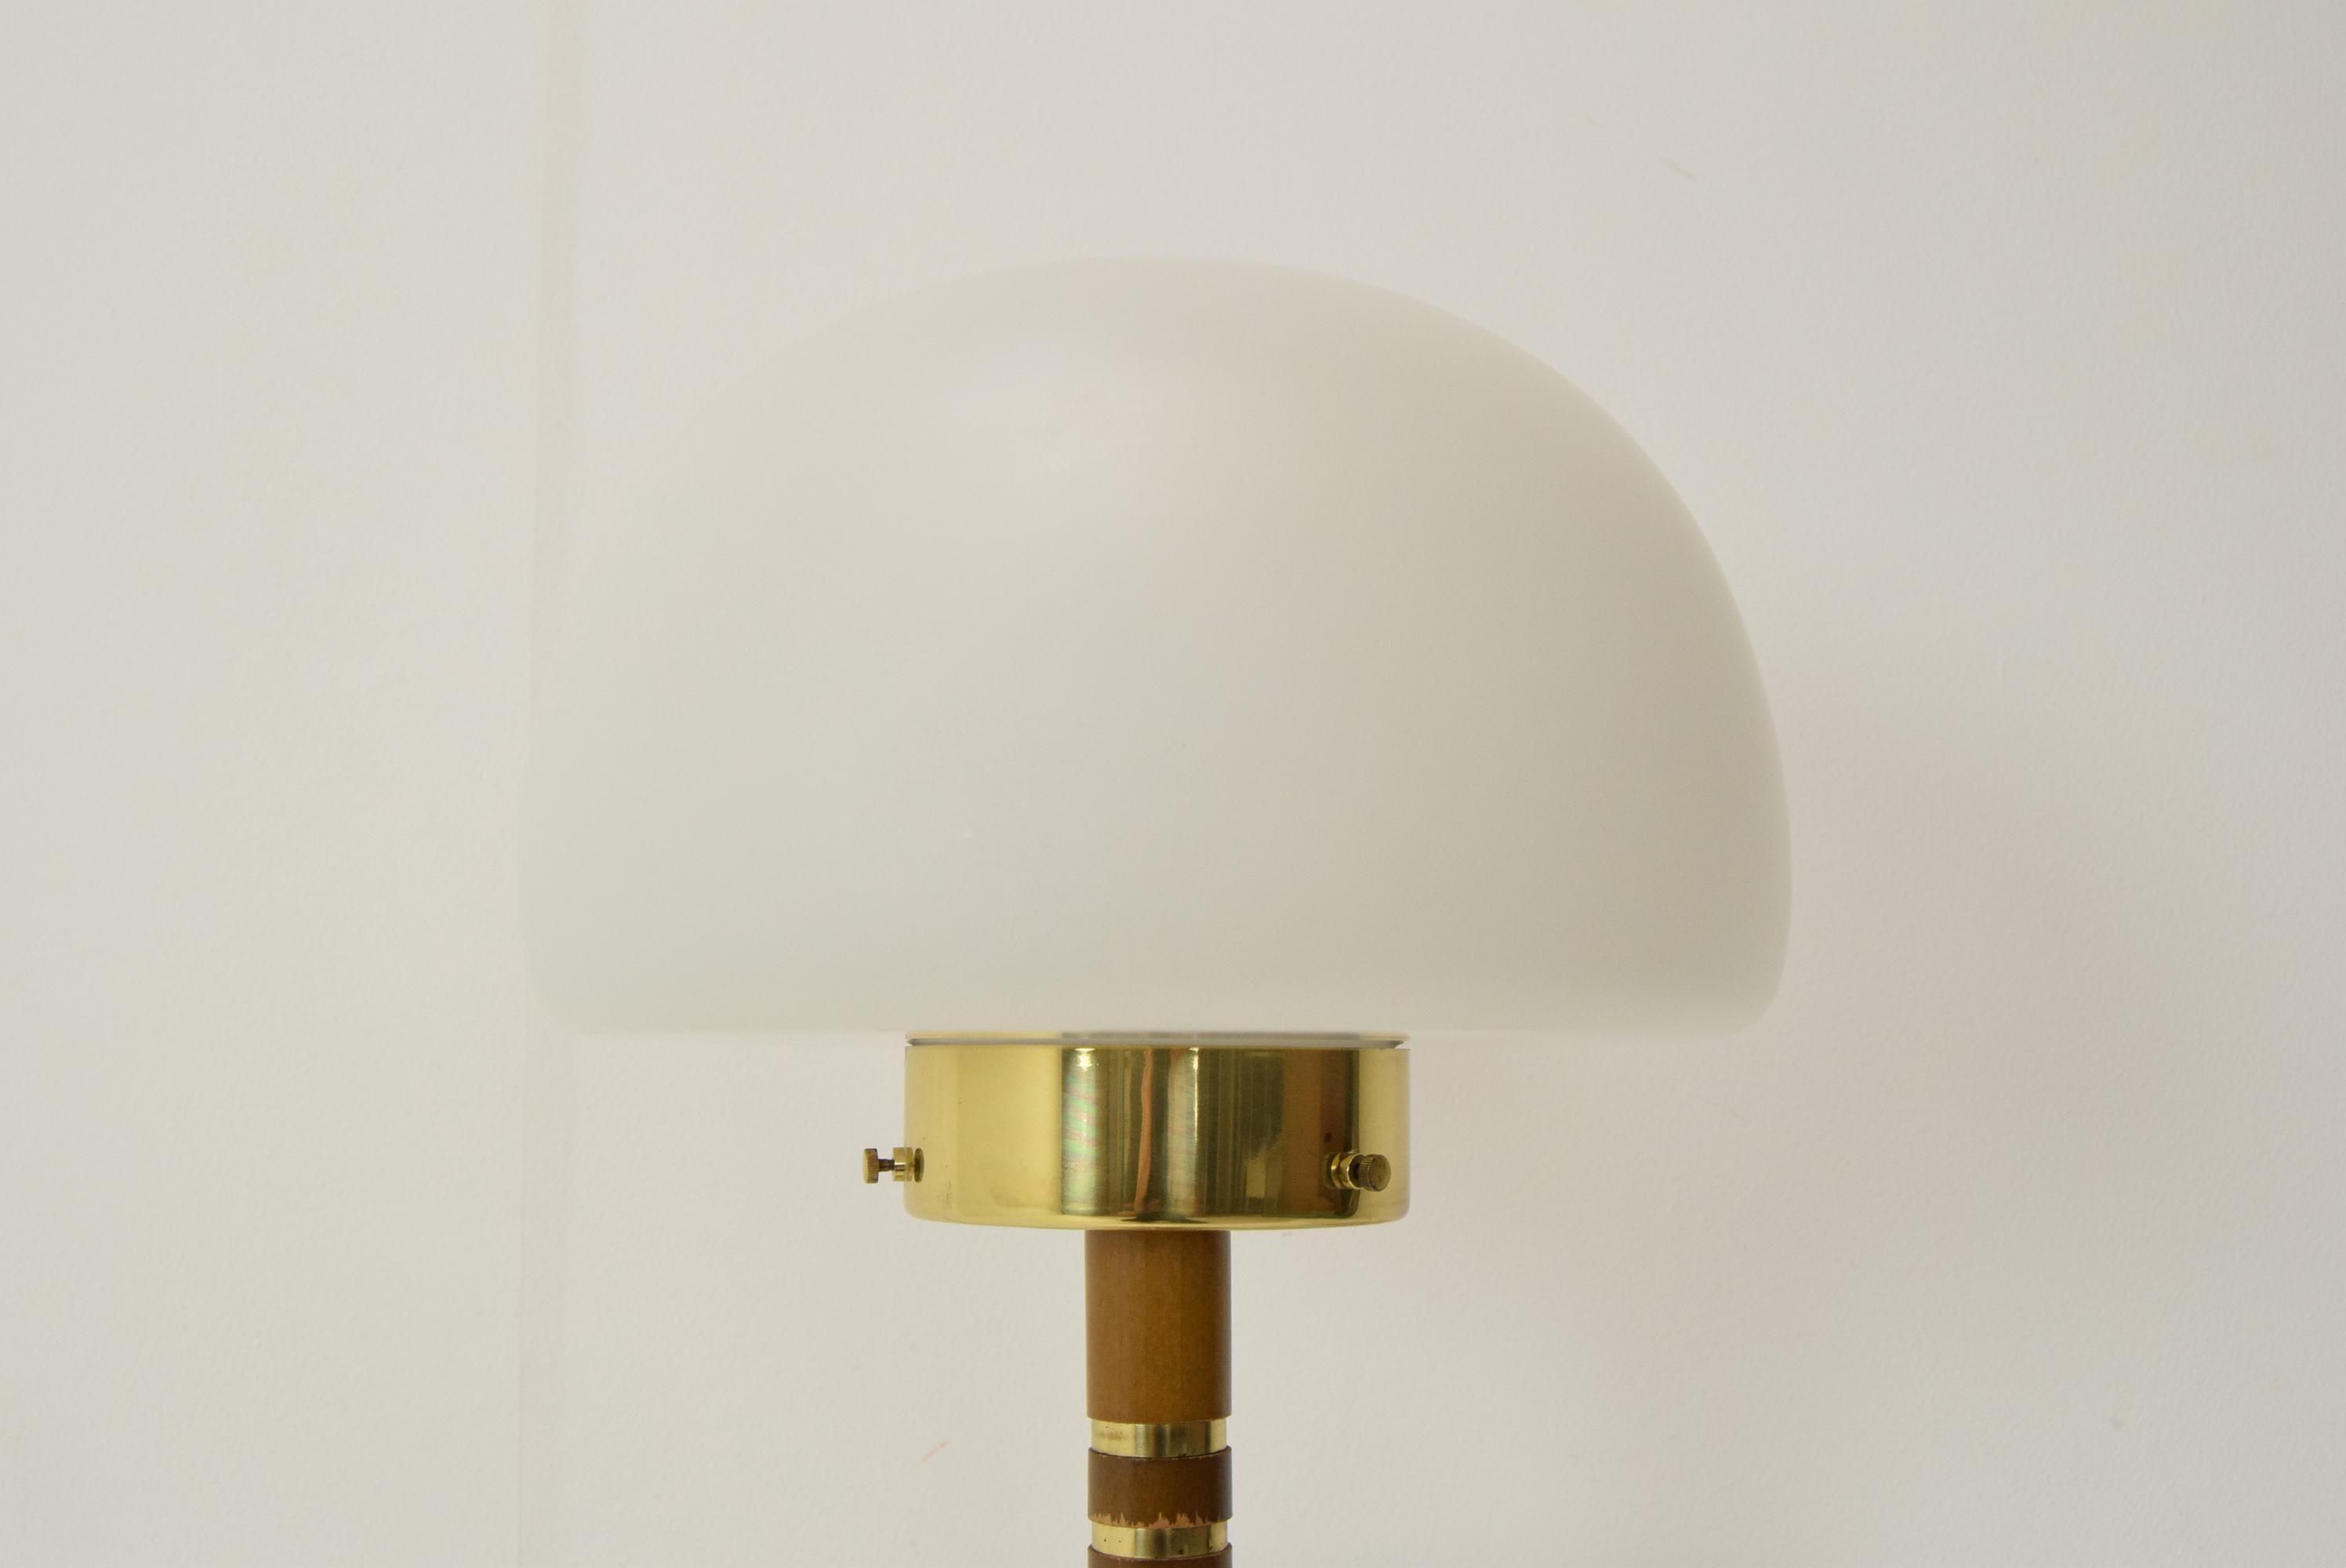 Czech Vintage Table Lamp Designed by Jaroslav Bejvl for Lidokov, 1960's. 